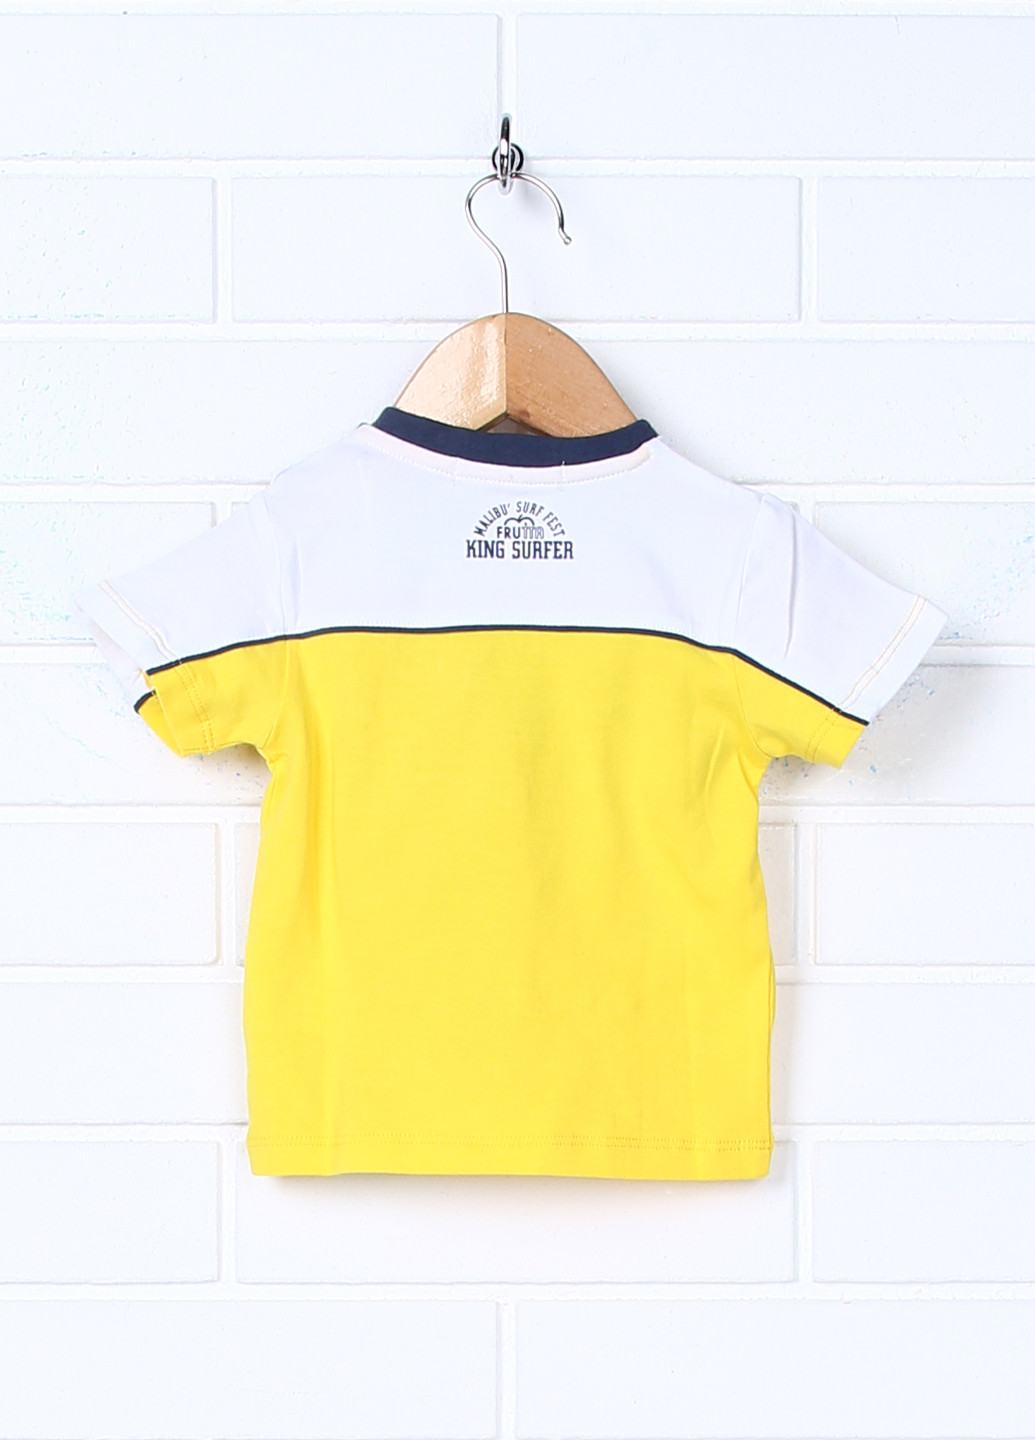 Желтая летняя футболка с коротким рукавом Frutta